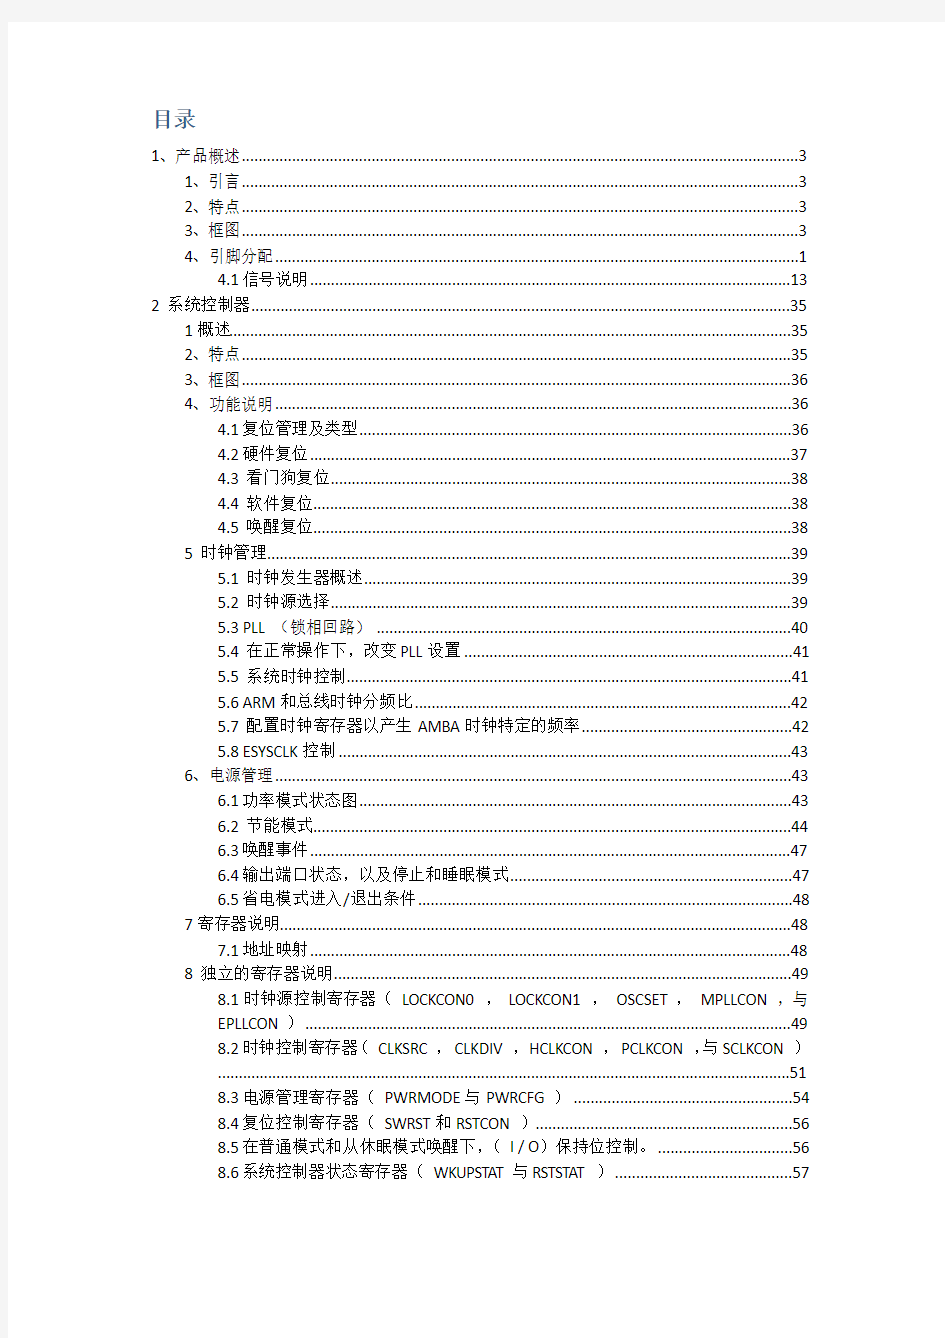 S3C2416芯片手册-中文不完整版